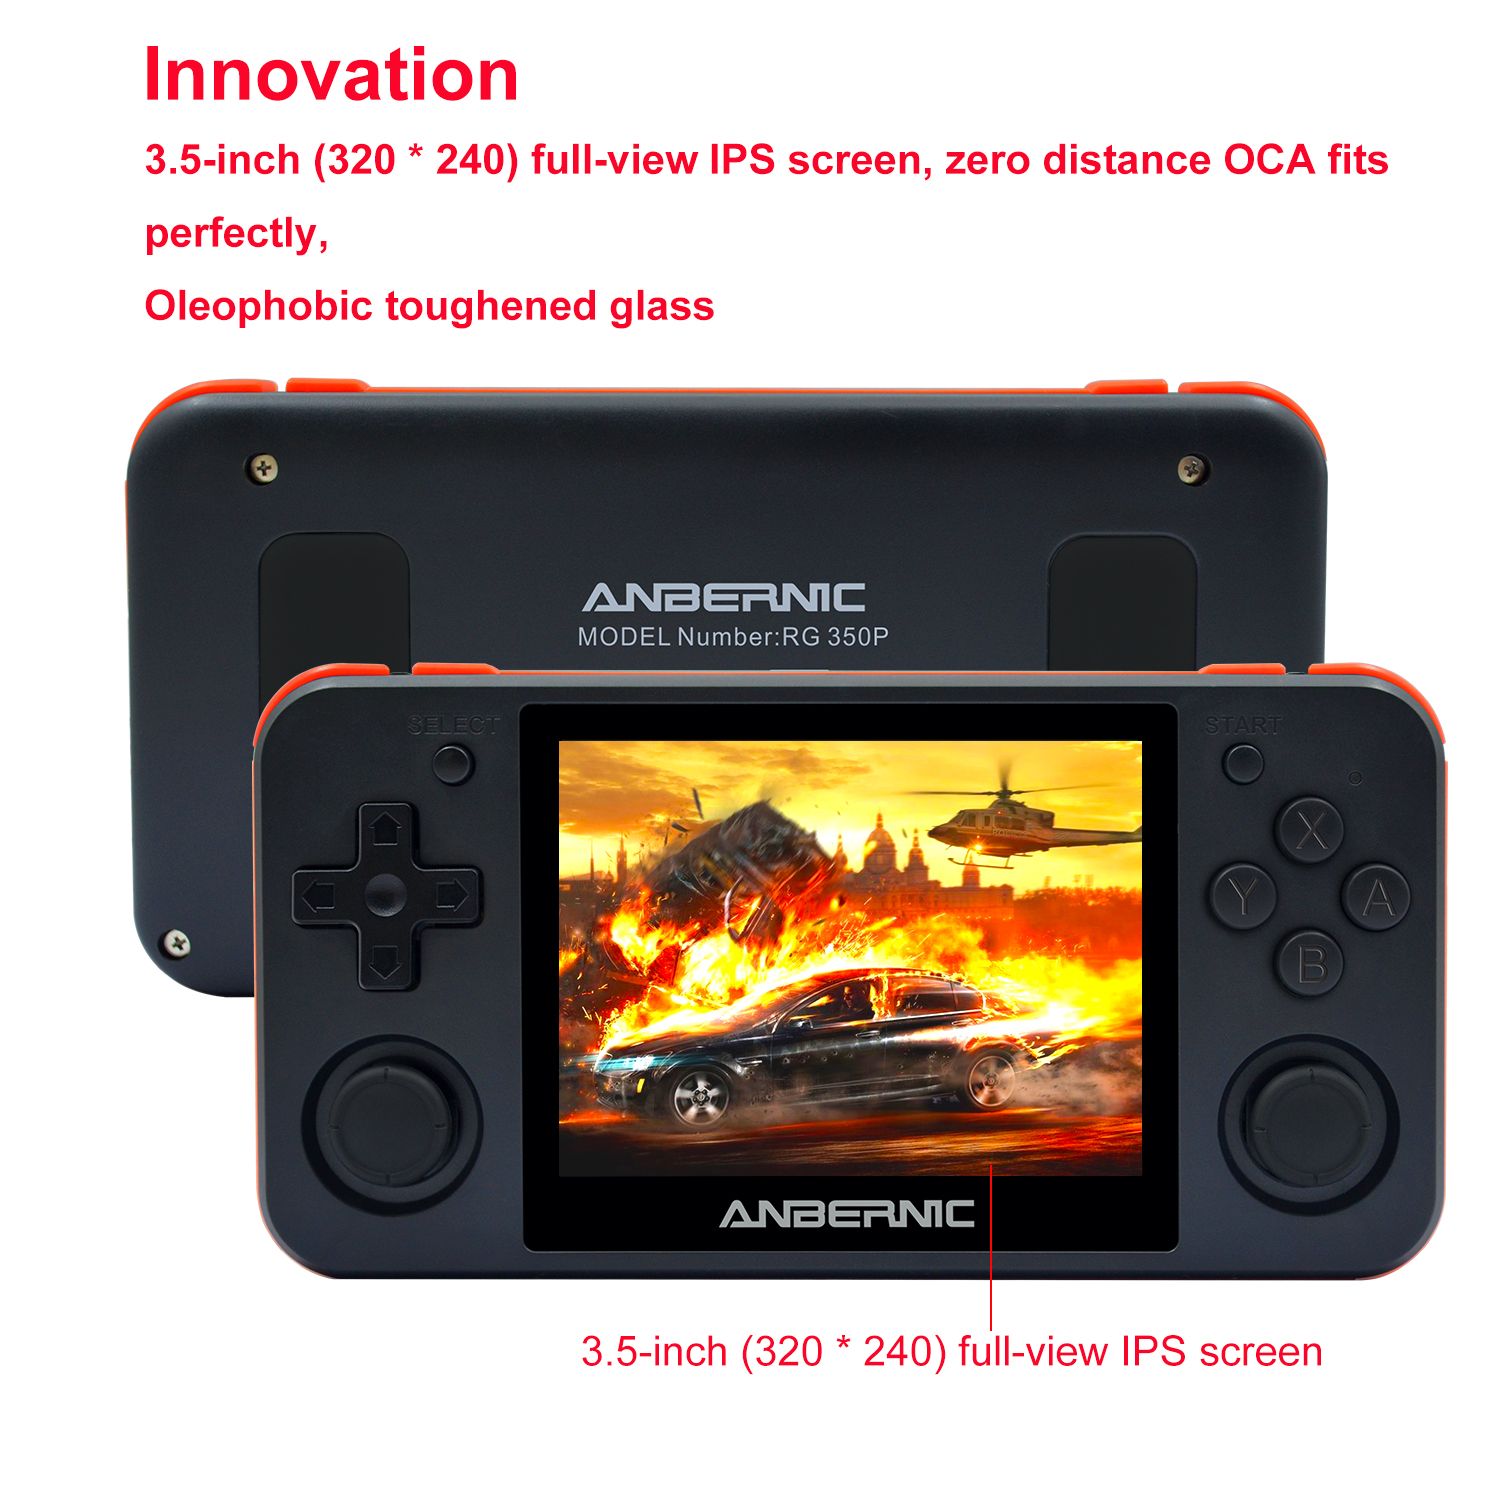 ANBERNIC-RG350P-16GB-2500-Games-Video-Game-Console-35-inch-IPS-HD-OLeophobic-Toughened-Screen-64-Bit-1715892